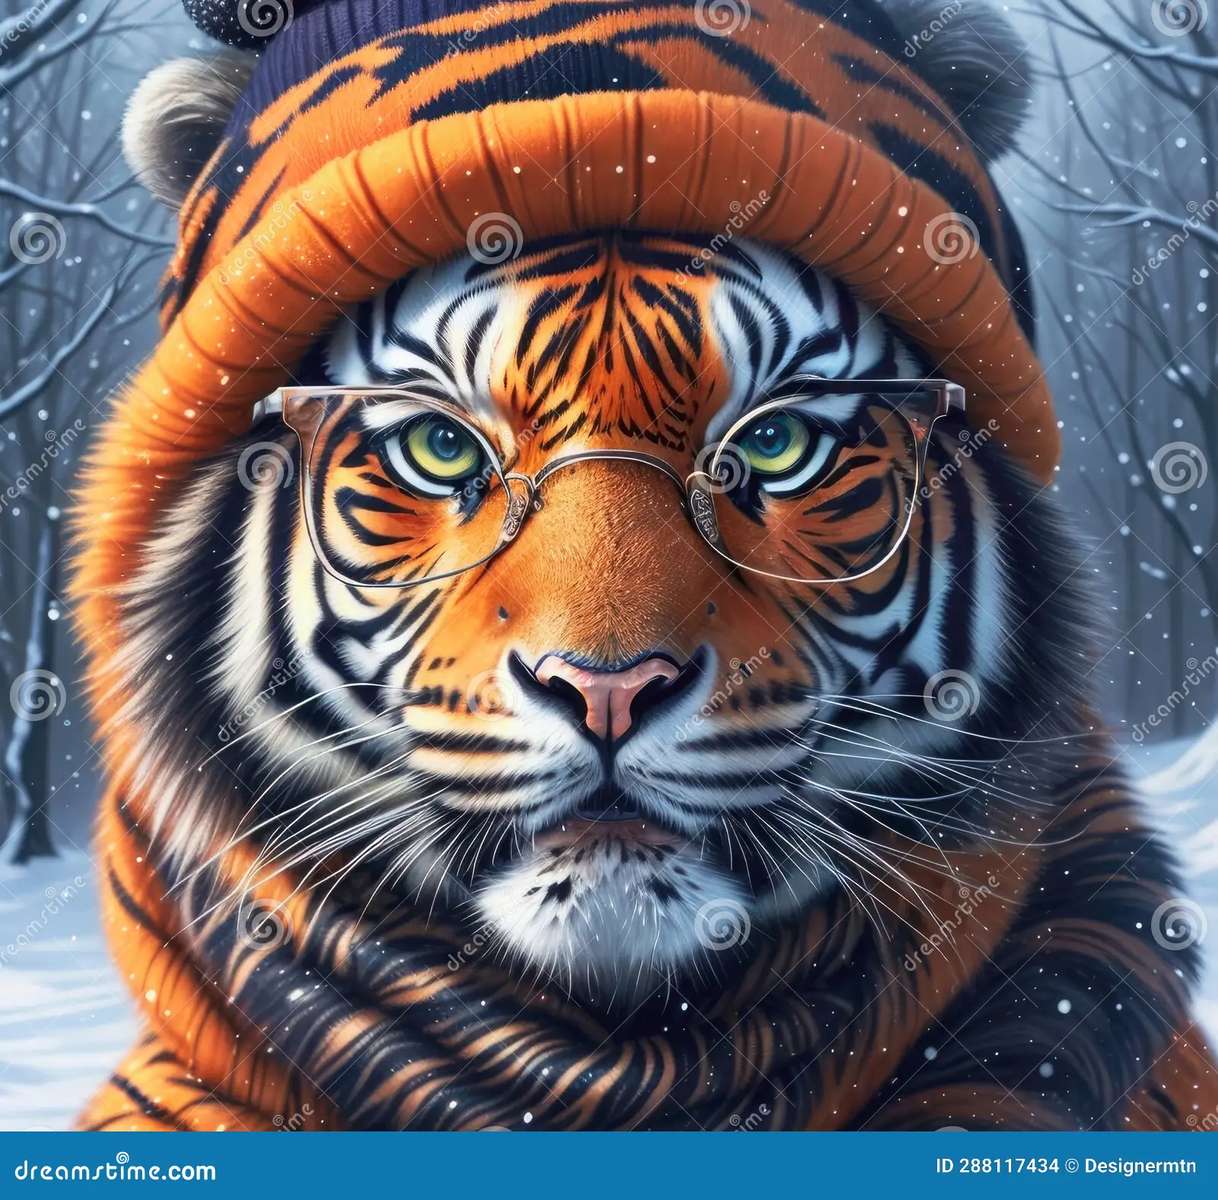 Фото тигра скласти пазл онлайн з фото